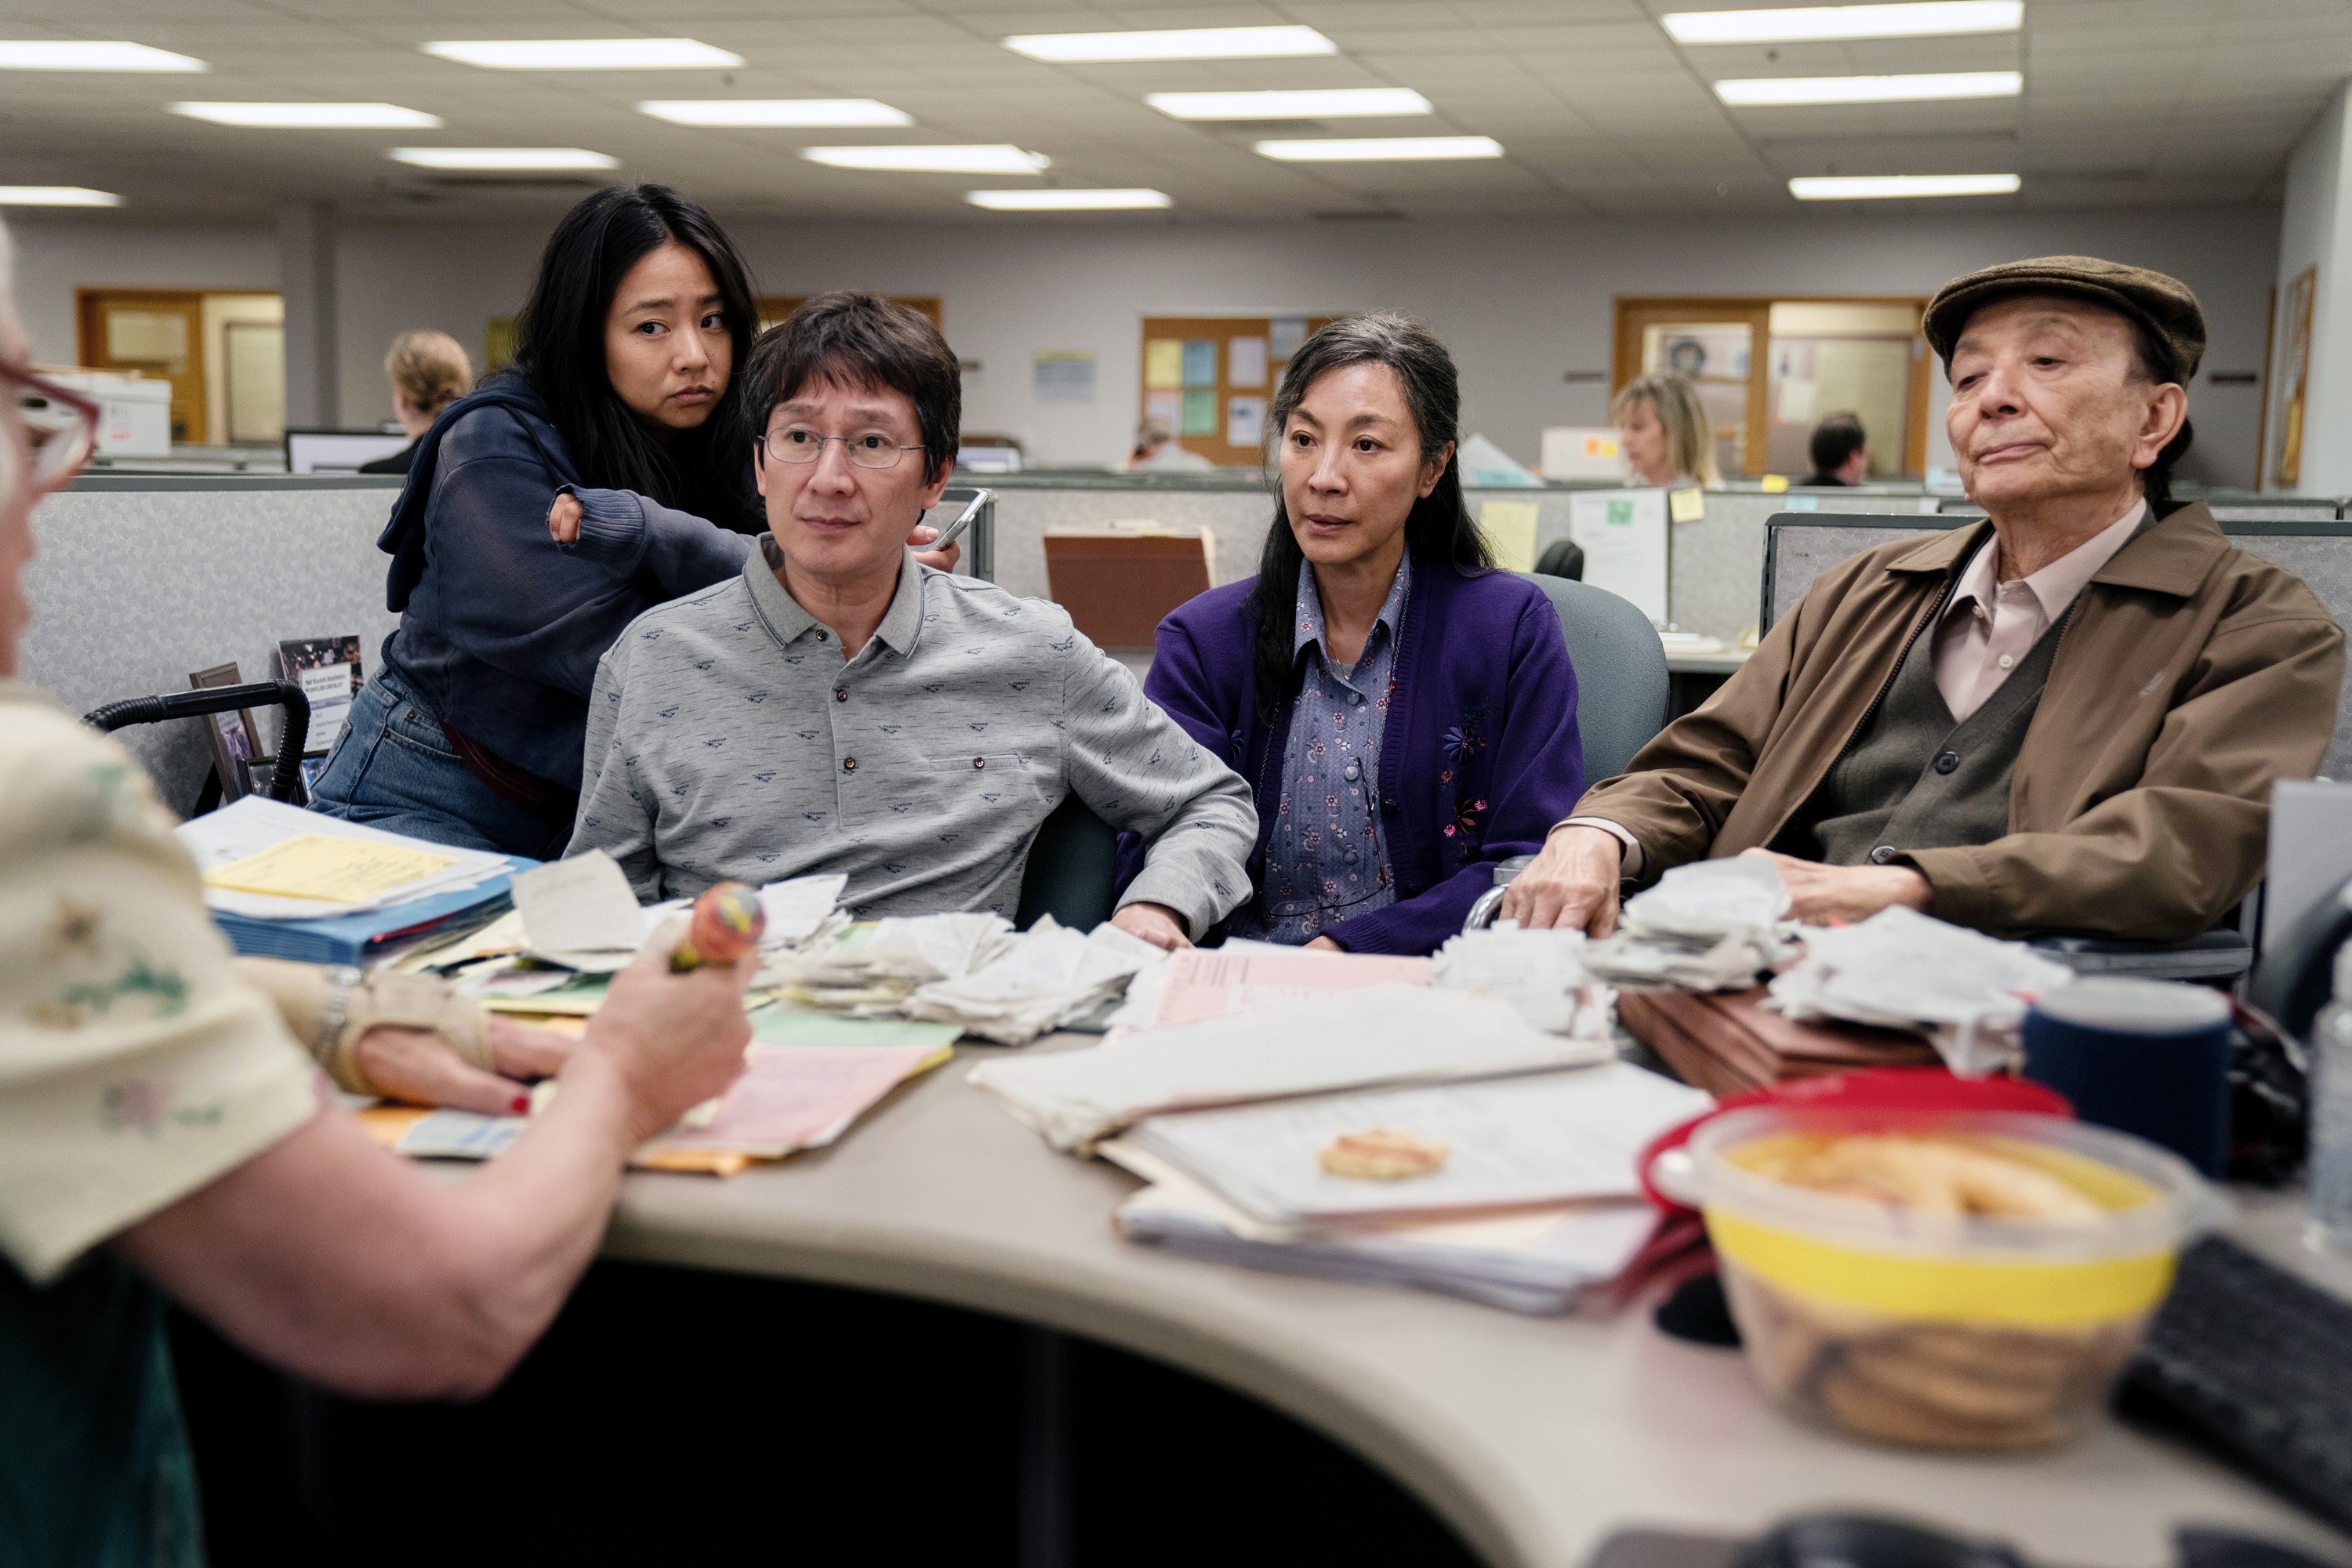 Stephanie Hsu, Ke Huy Quan, Michelle Yeoh, and James Hong sit at a IRS desk